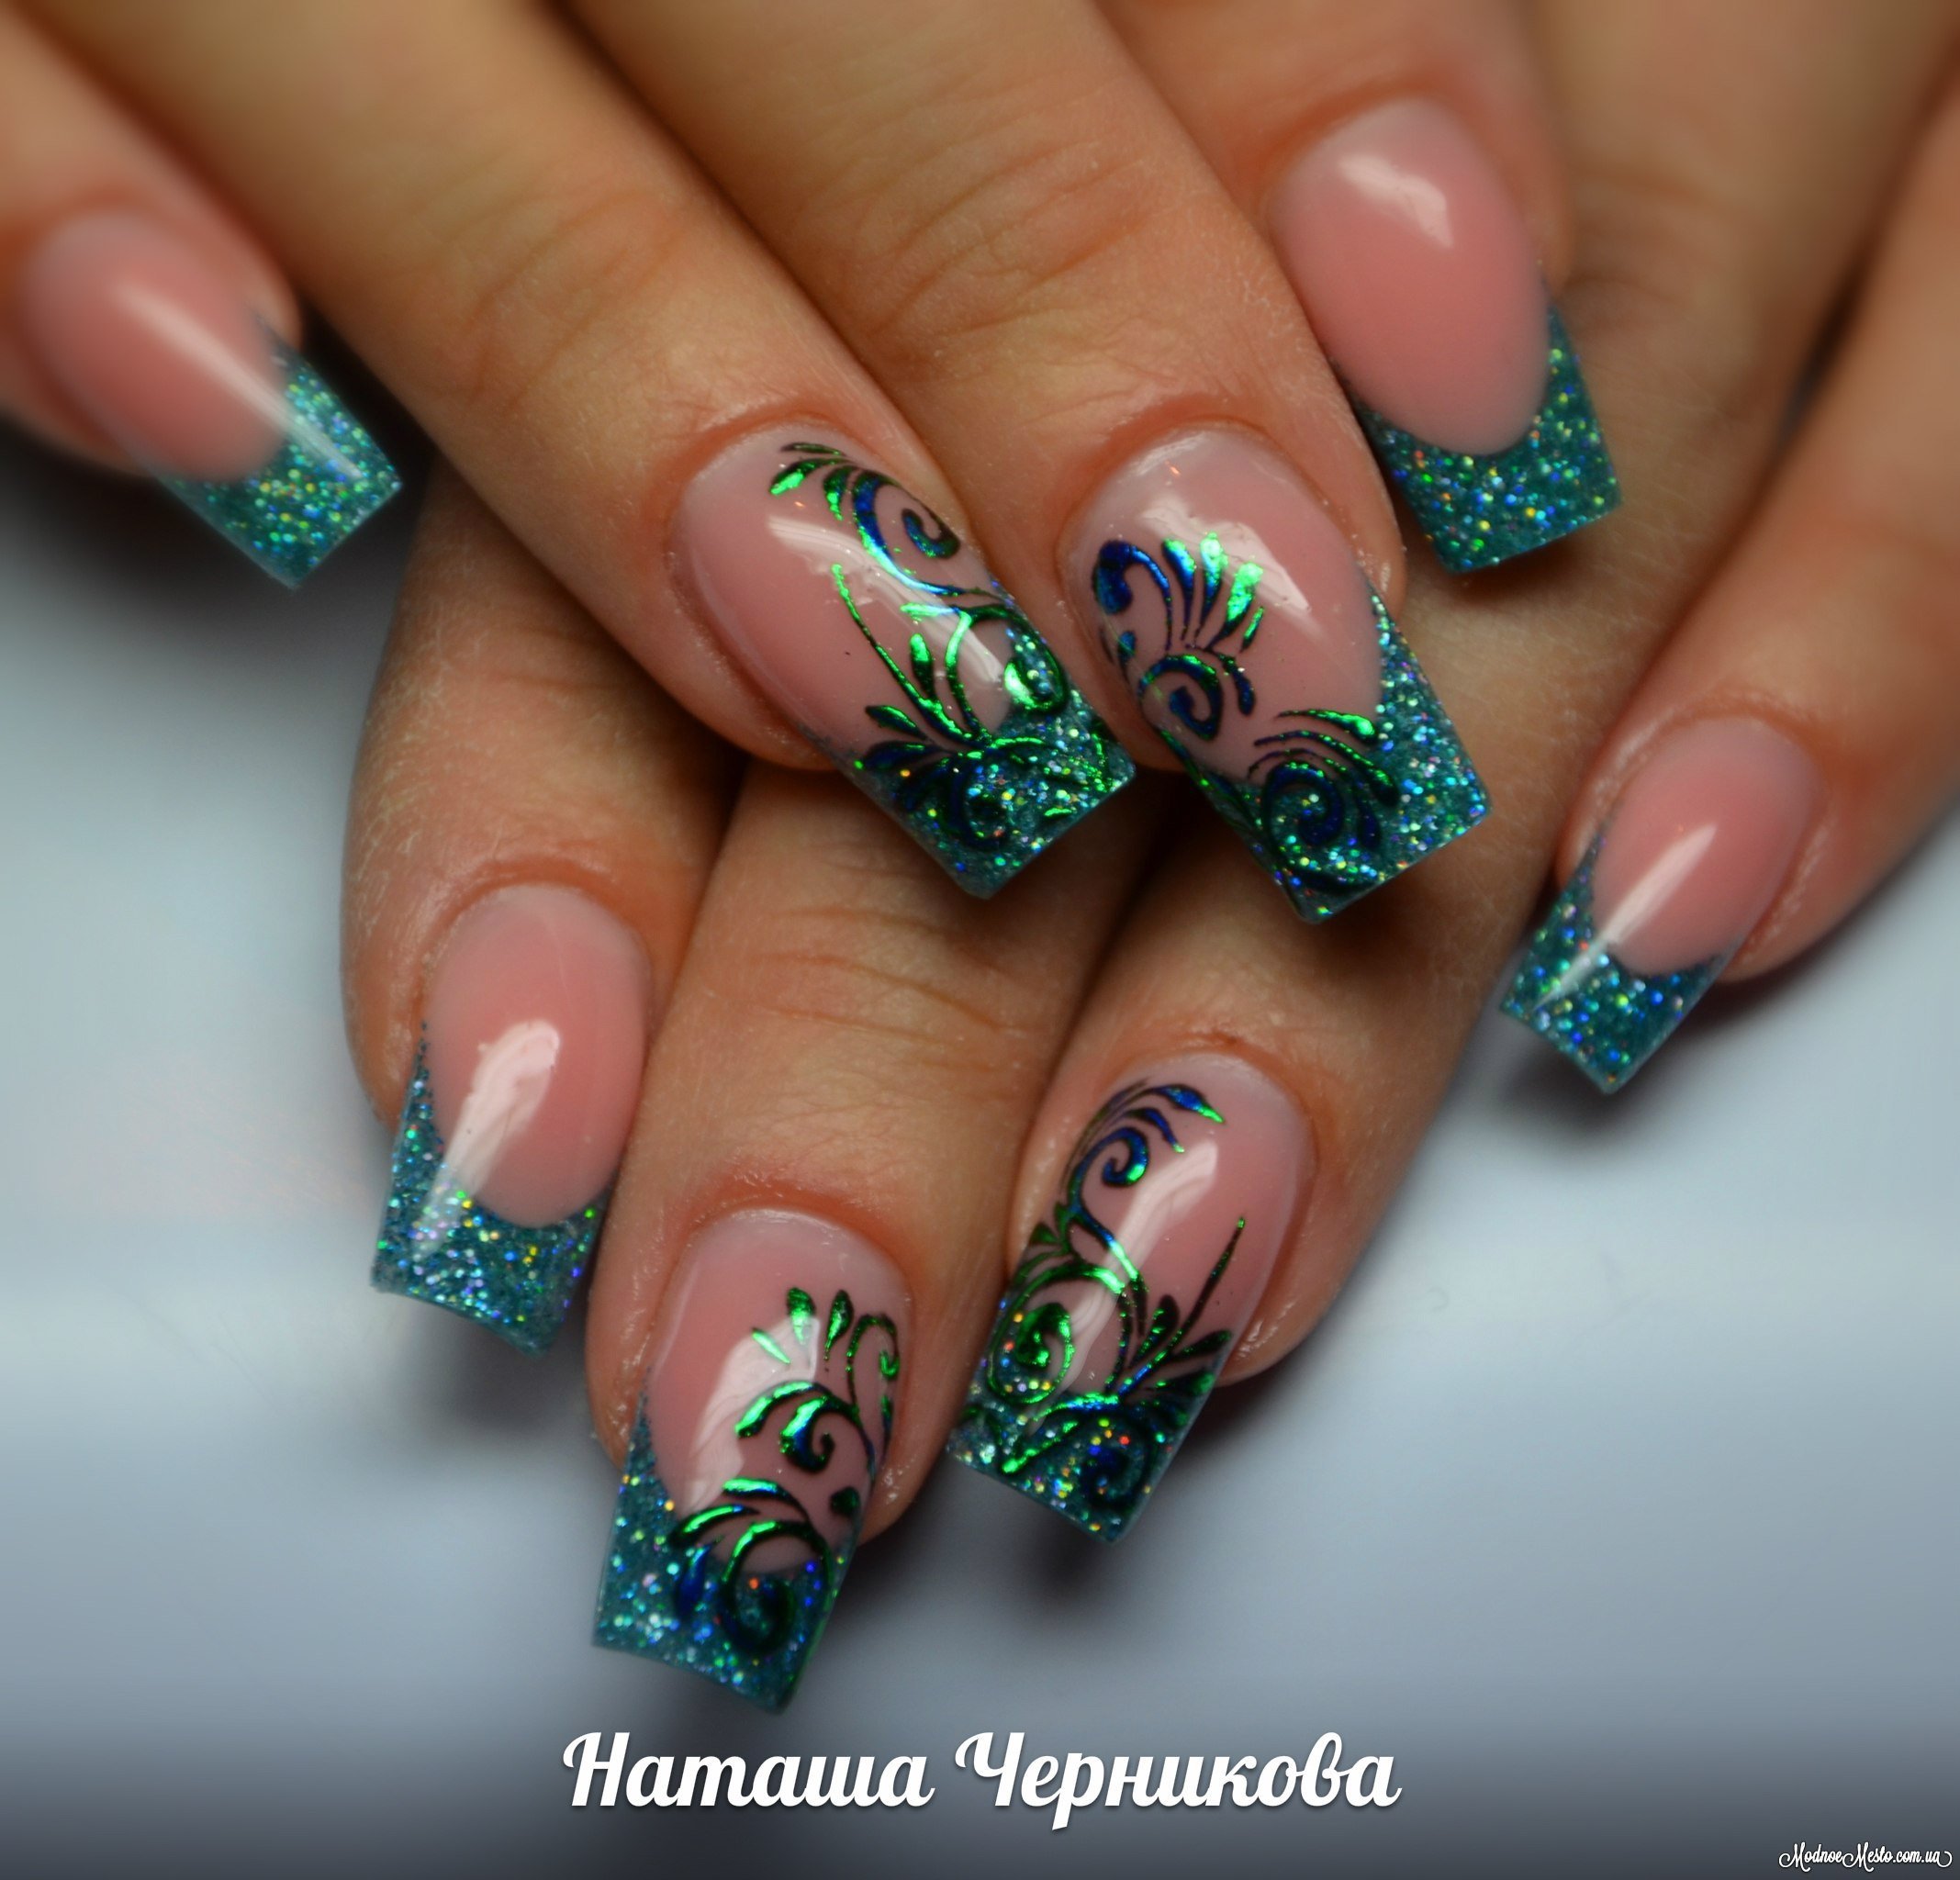 Beautiful bright nails